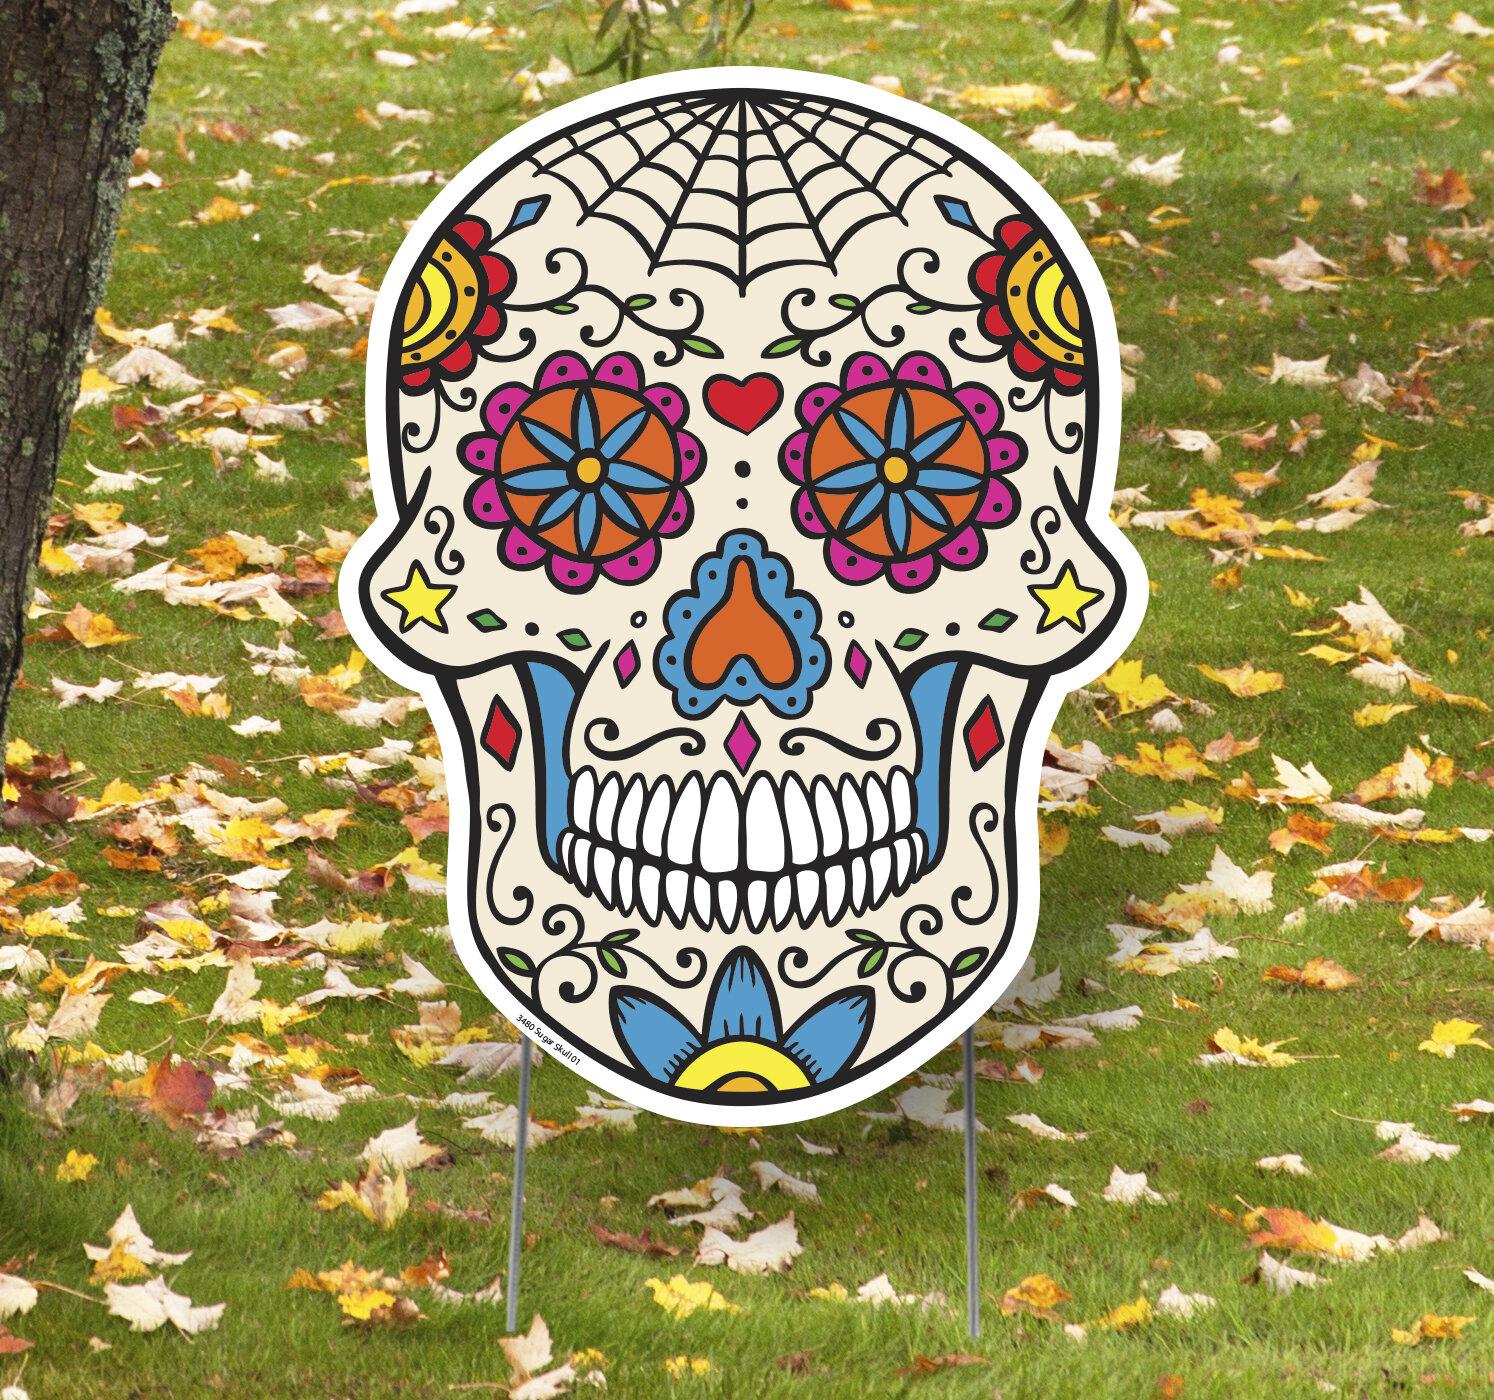 Colorful Sugar Floral Skull Skeleton Watercolor 1 Sticker